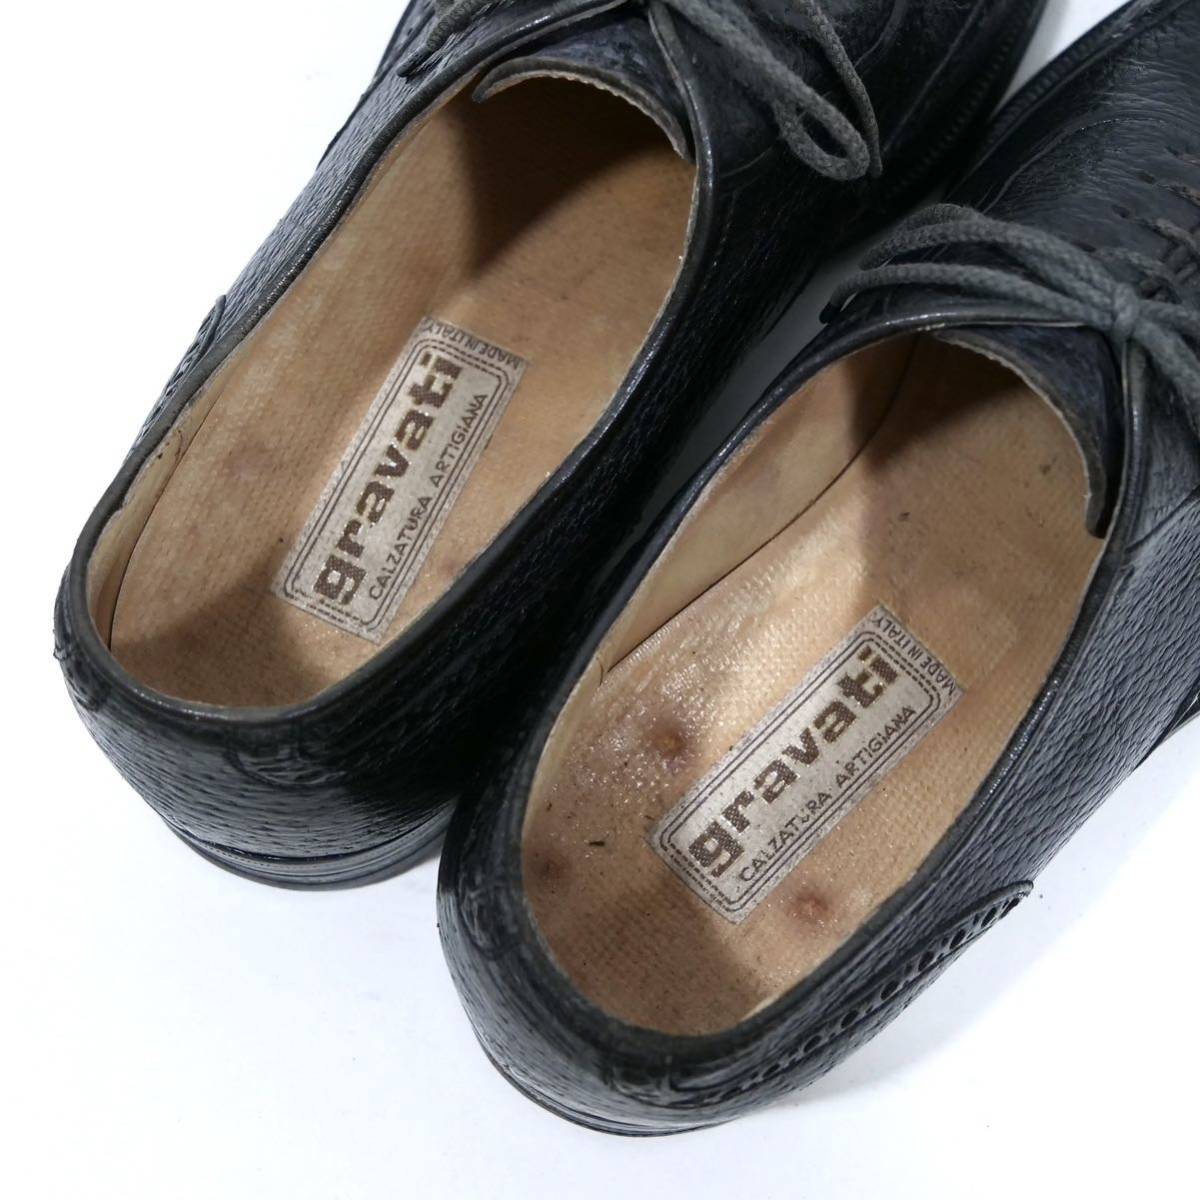 【gravati】グラバティ ブラック 内羽根式フルブローグ UK4.5 23cm前後 ビジネスシューズ メンズ 革靴_画像7